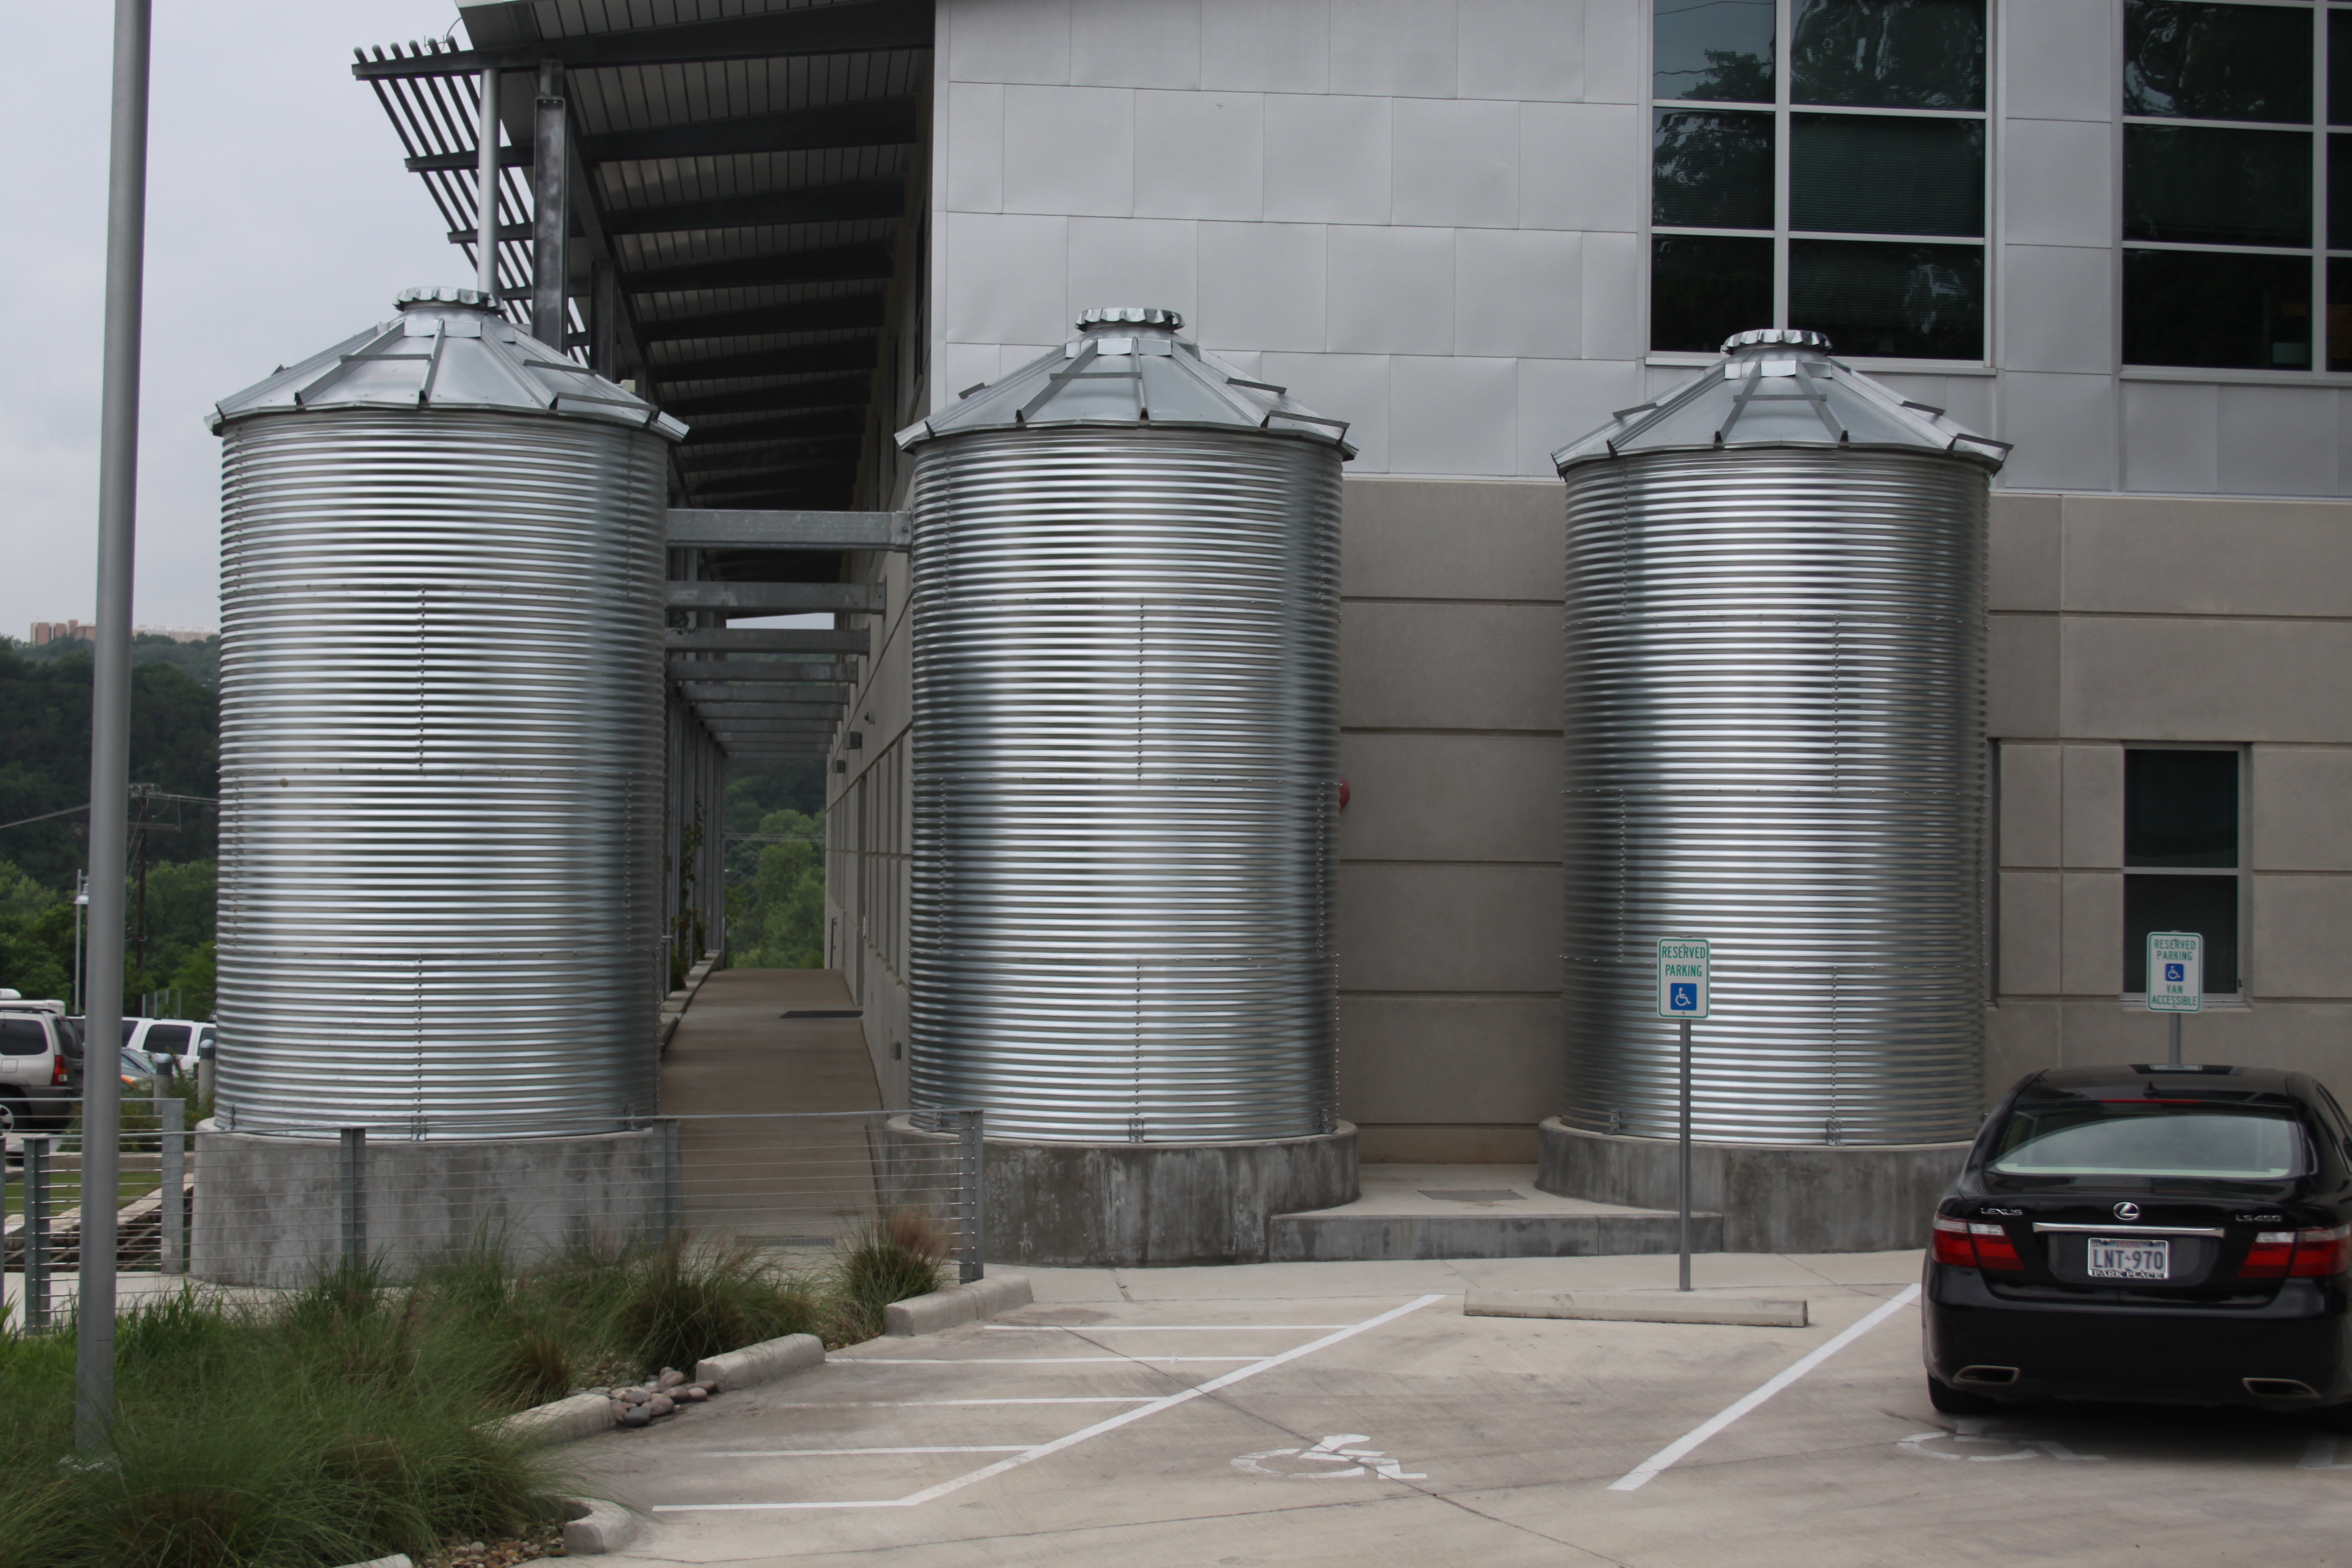 Large rainwater harvesting tanks pictured. 